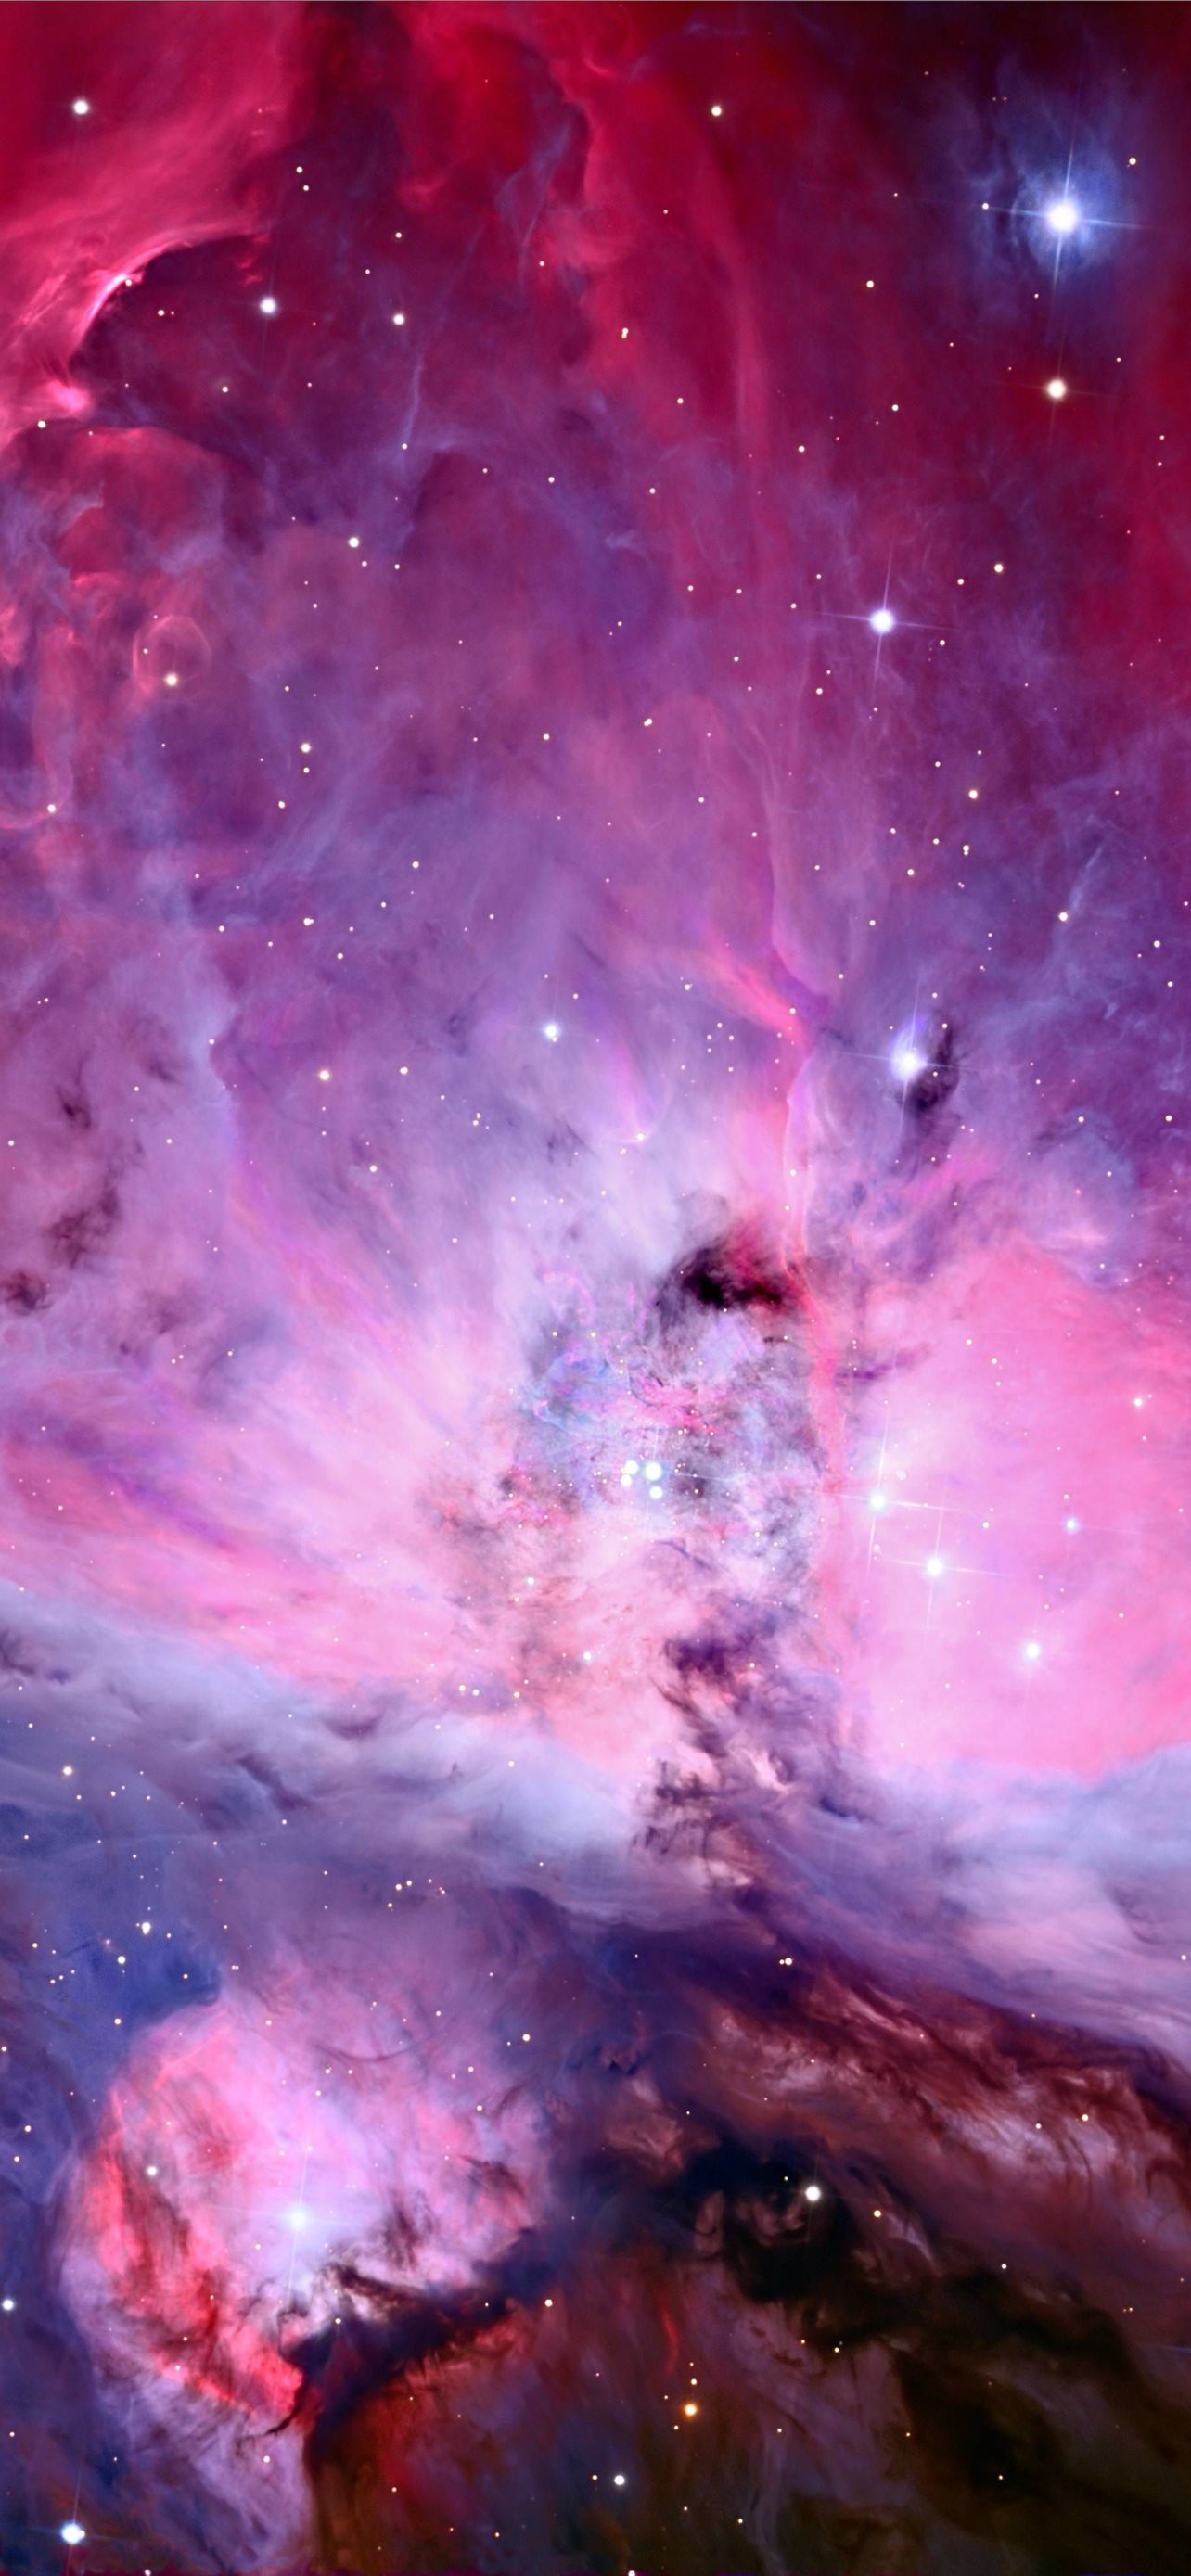 Hubble Space Telescope nasahubble  Instagram photos and videos